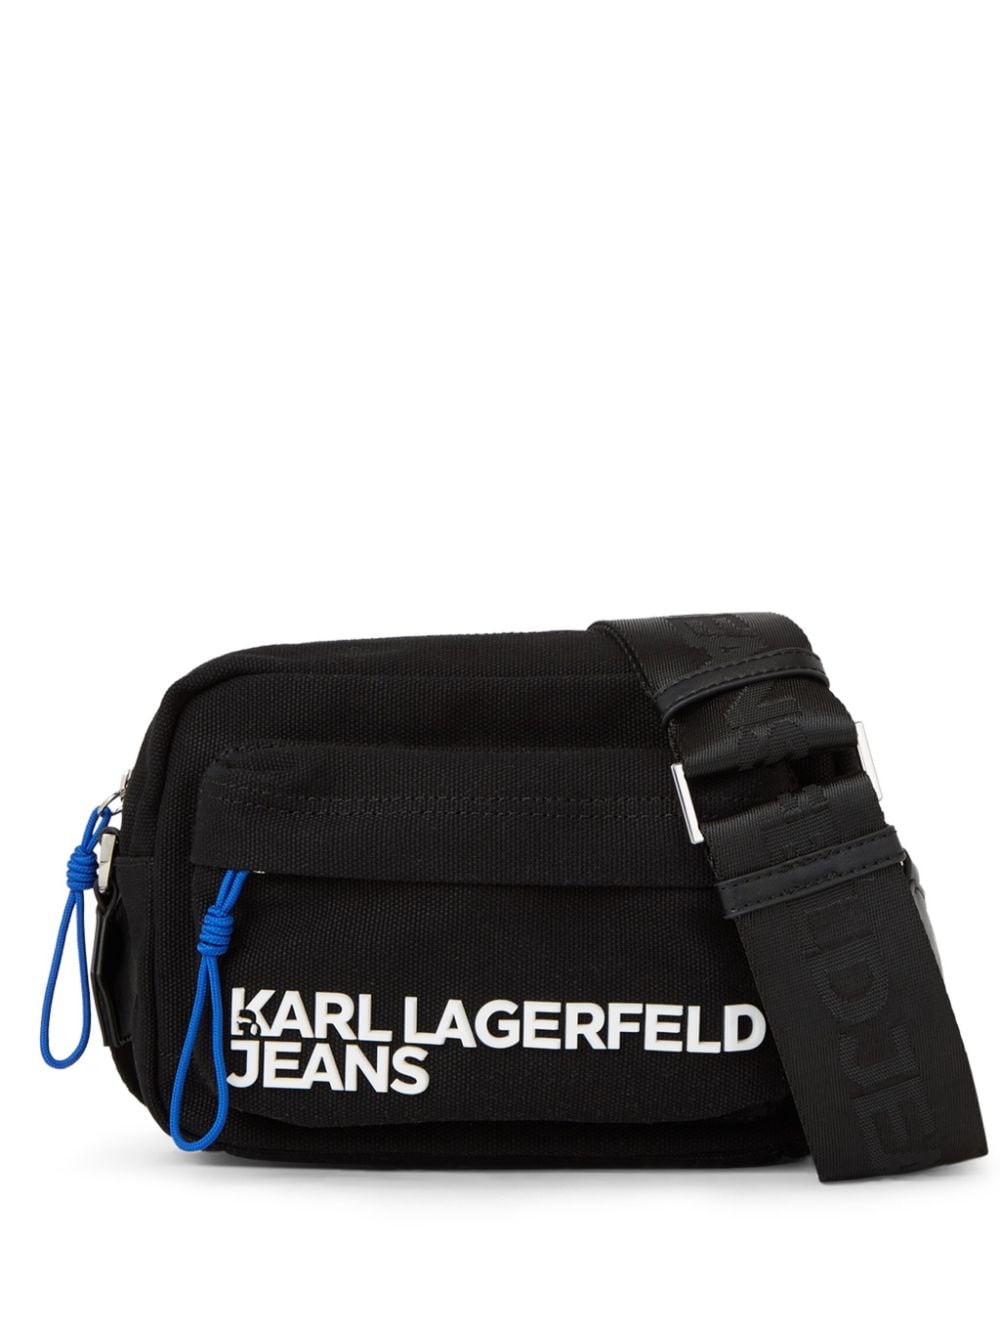 Karl Lagerfeld Jeans Utility Schultertasche - Schwarz von Karl Lagerfeld Jeans